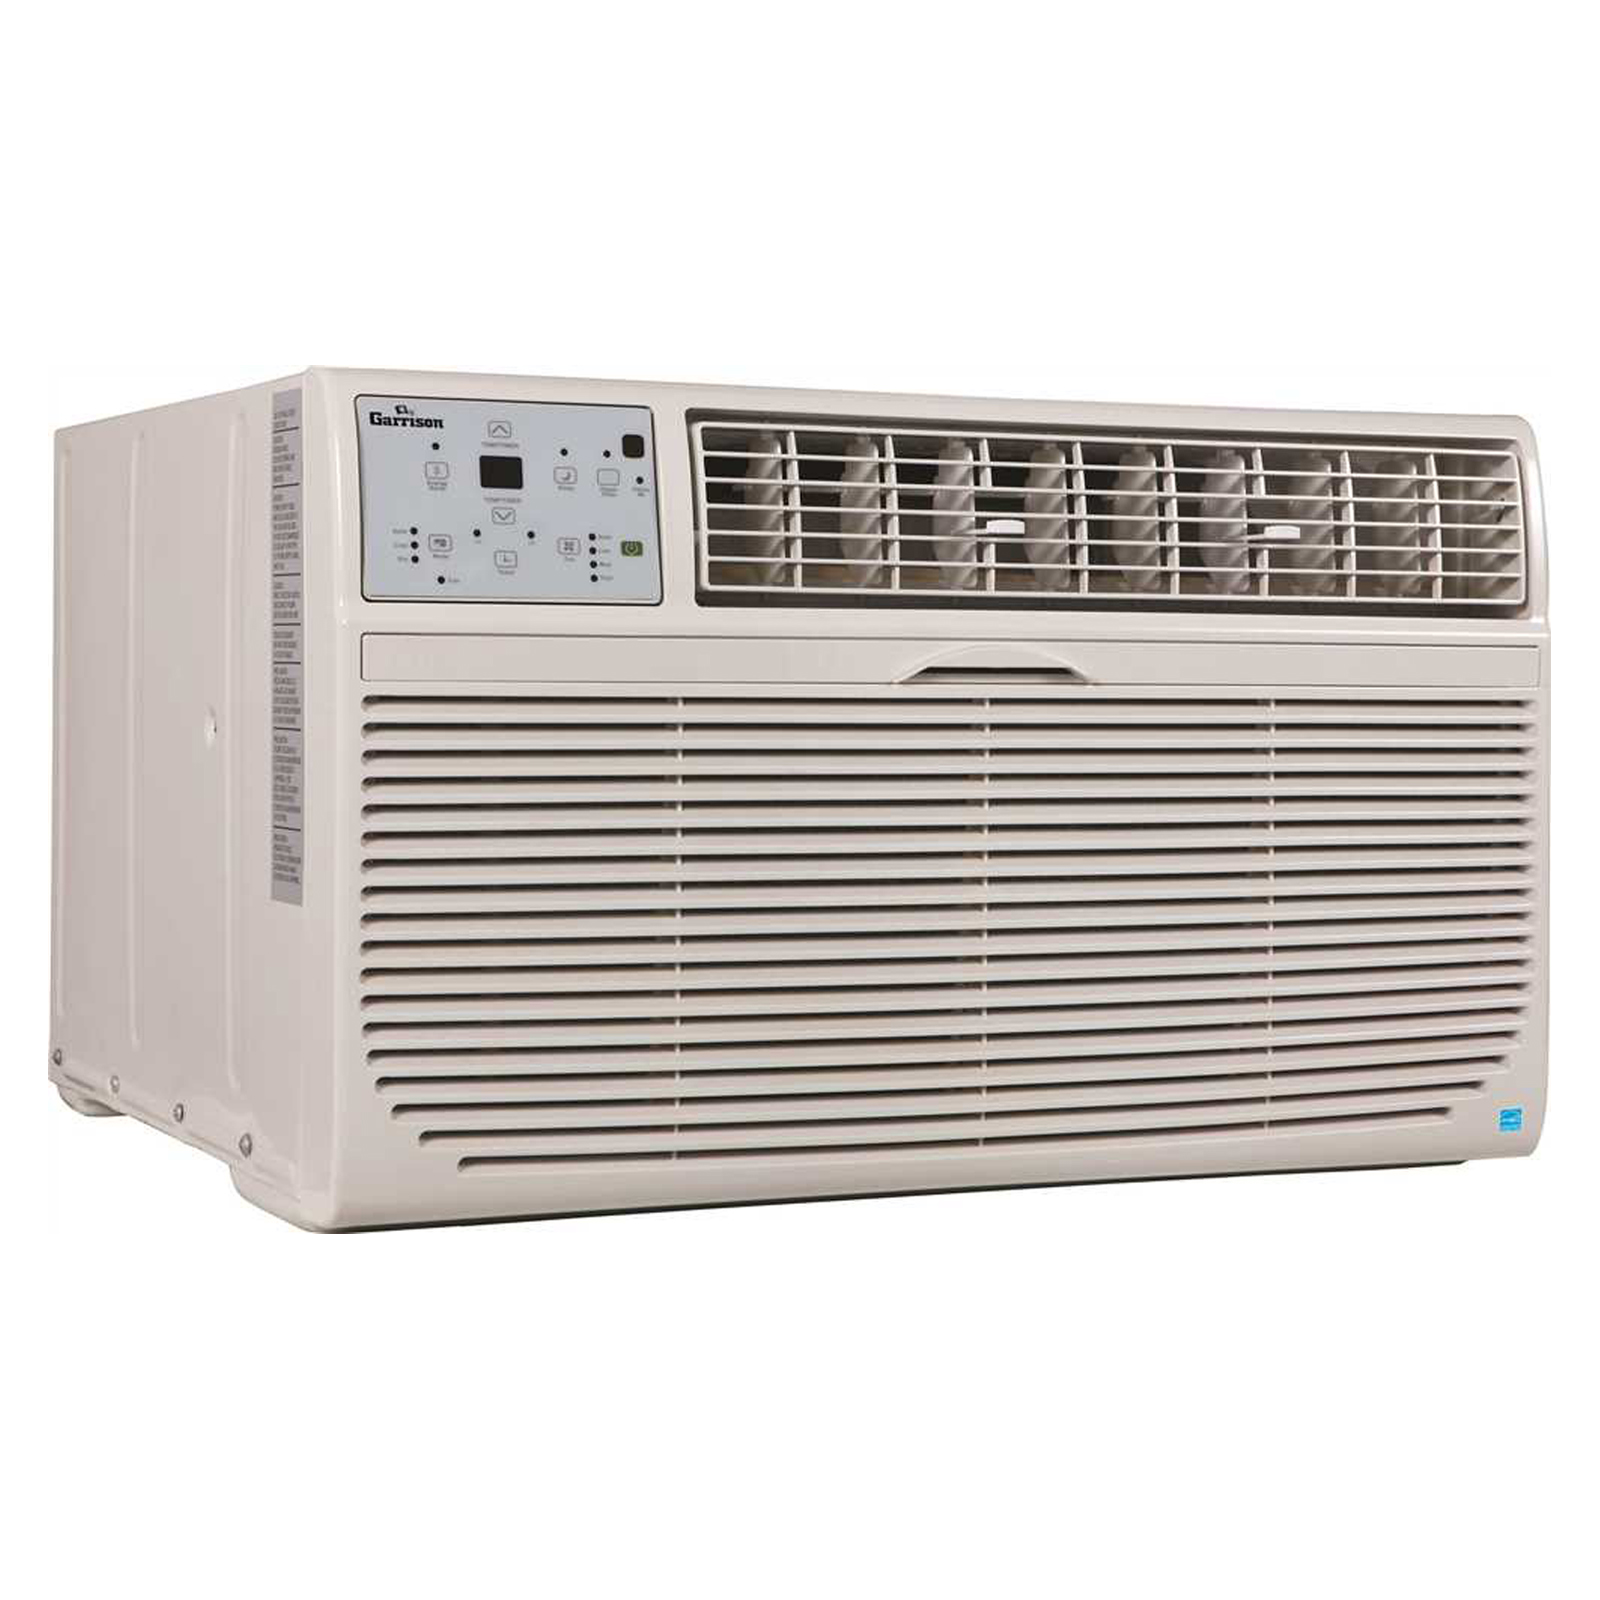 Garrison MWEUW210CRN1BCJ6 10000BTU Through-the-Wall Air Conditioner w/ 24-Hour Timer - White